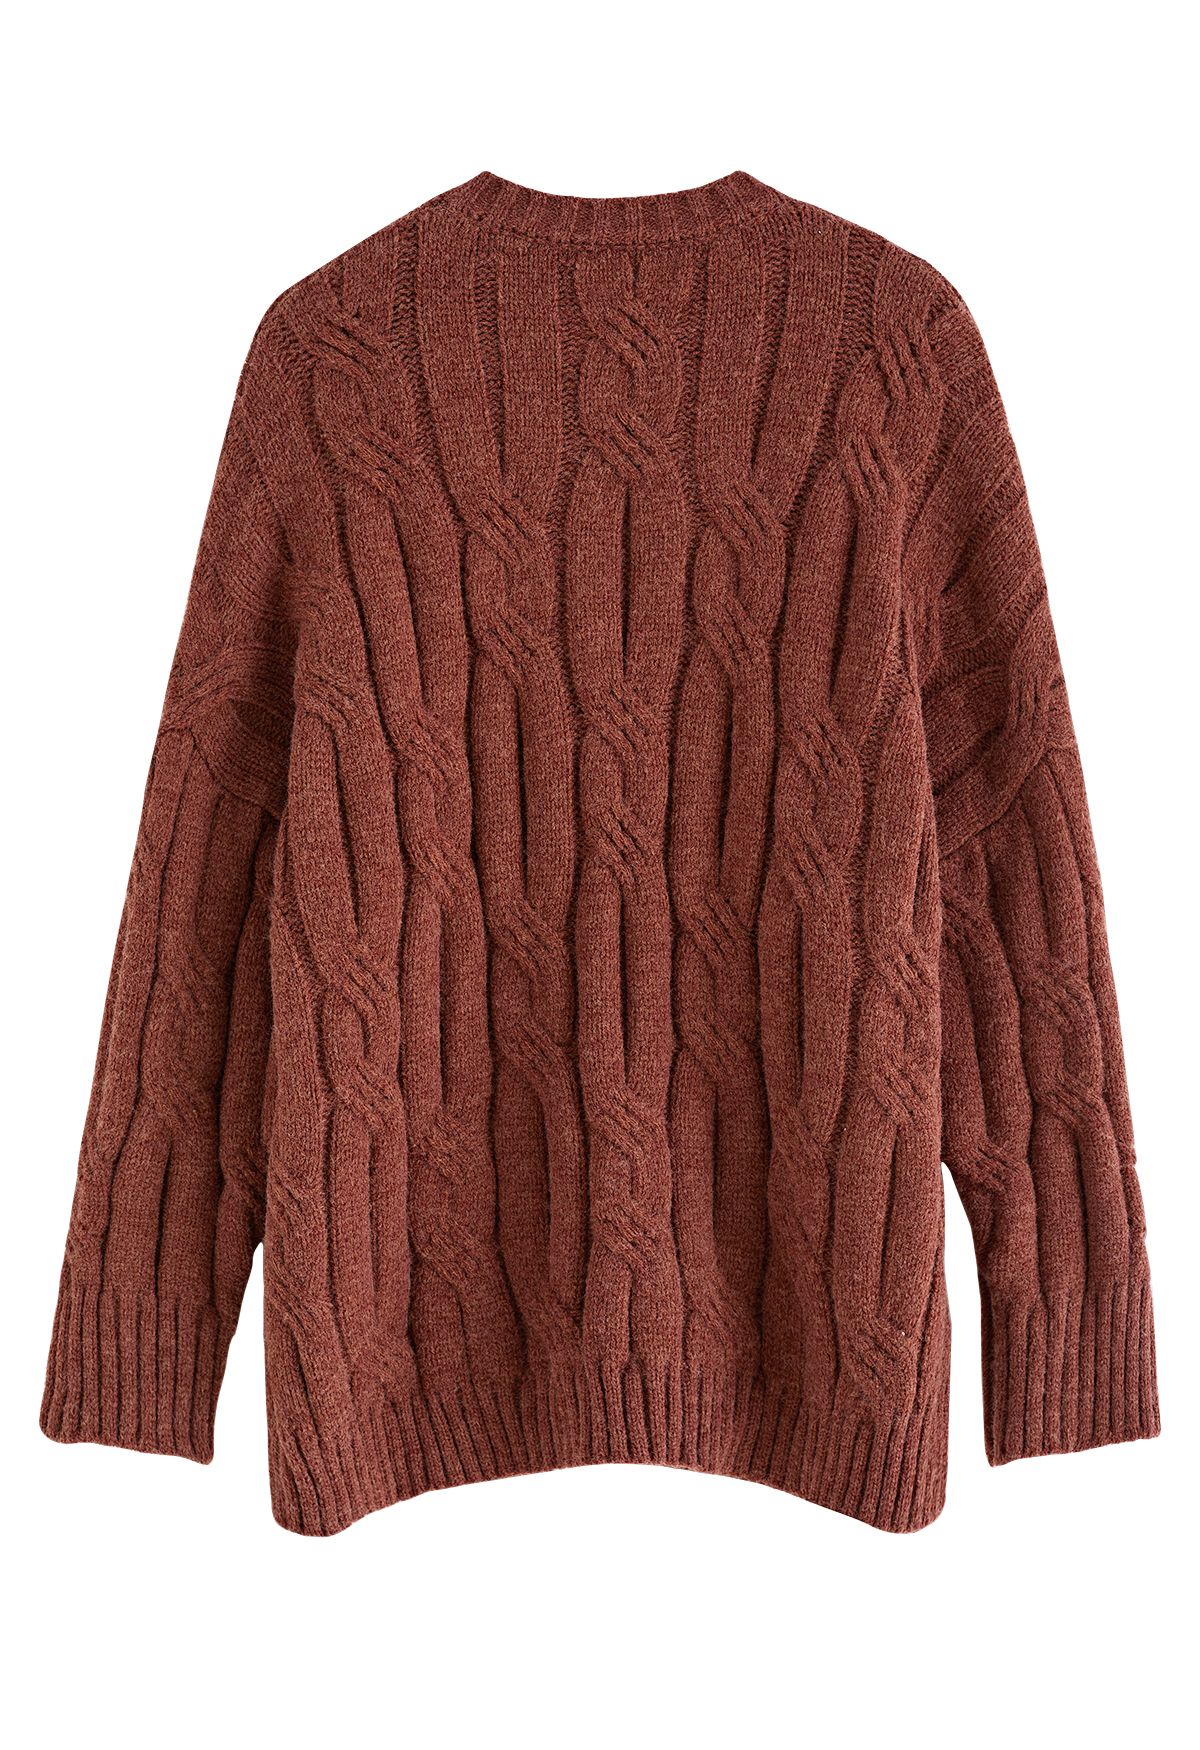 Braid Texture Round Neck Knit Sweater in Rust Red